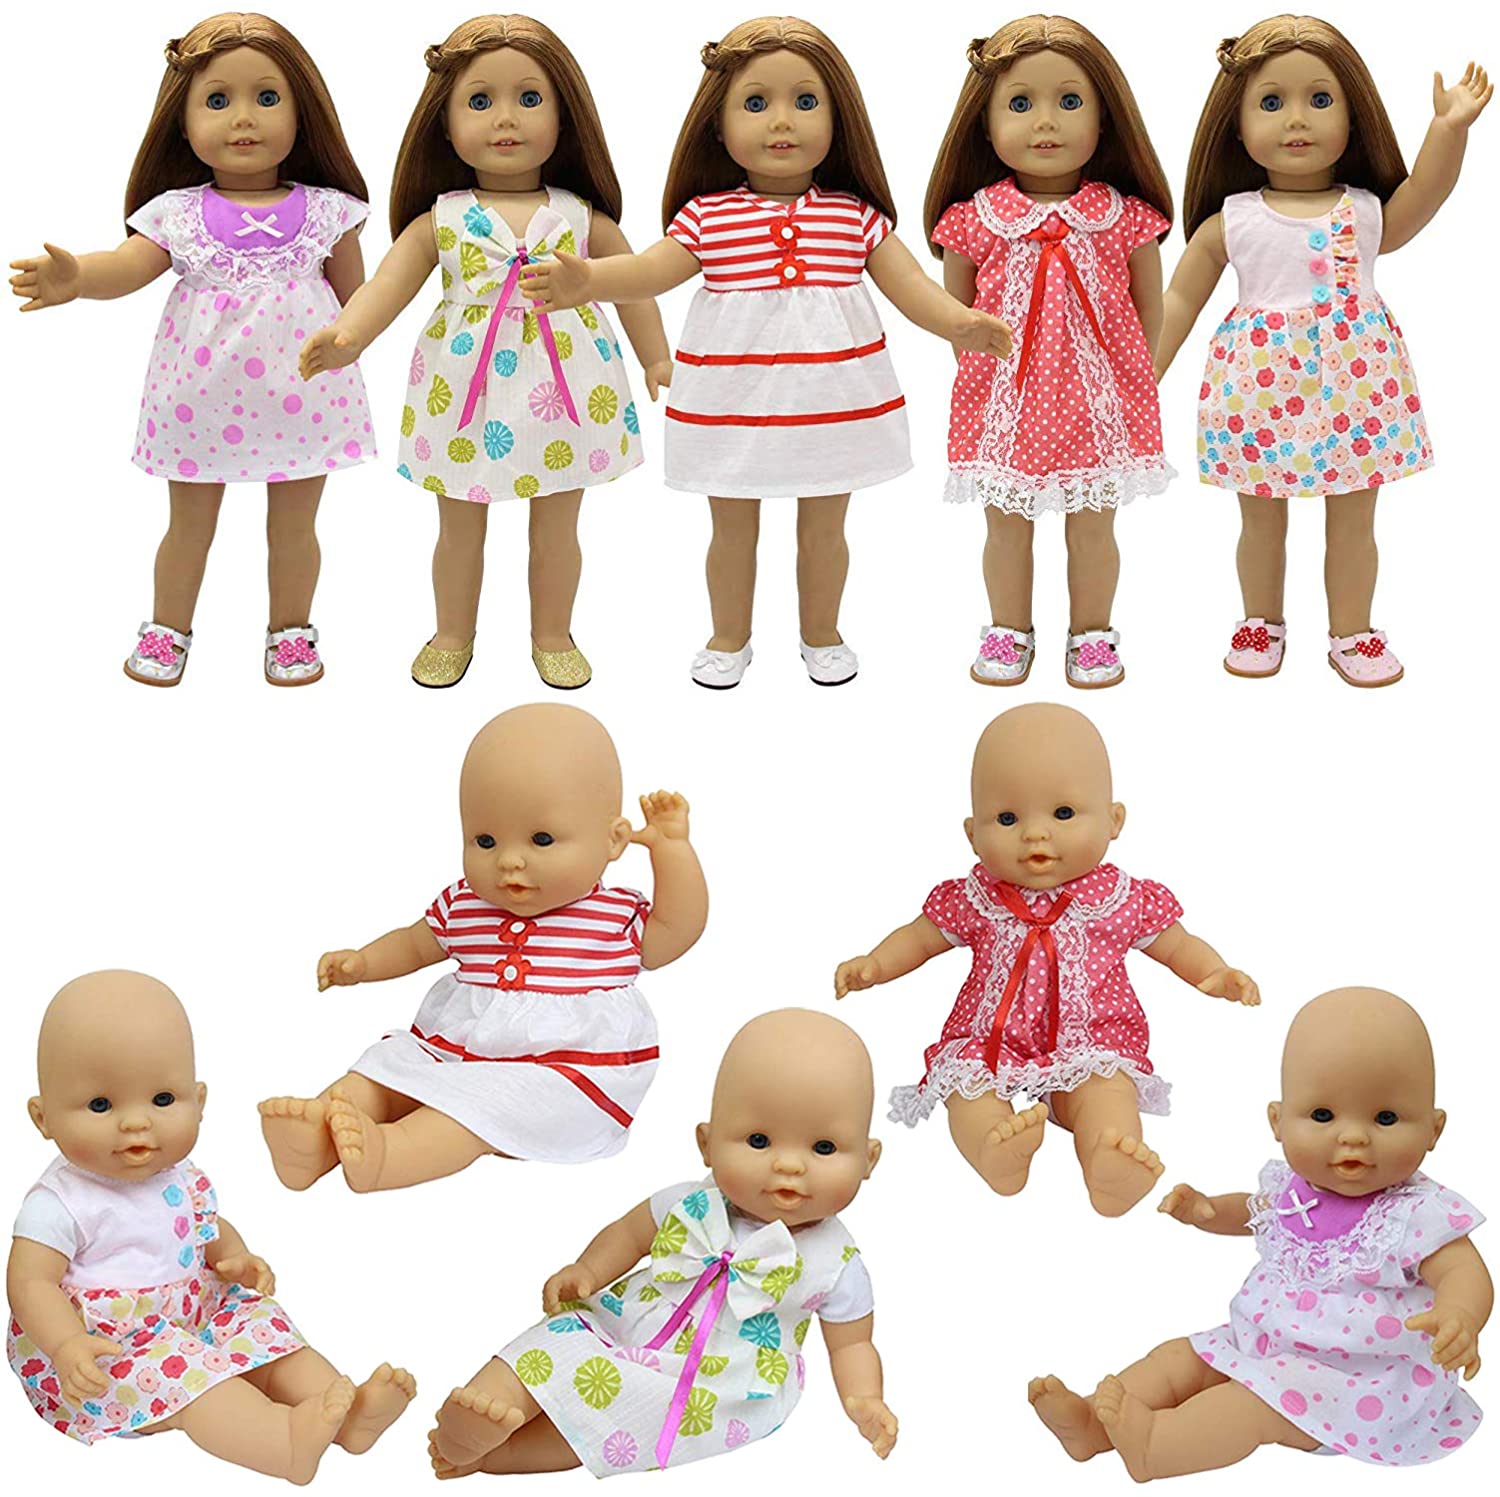 ZITA ELEMENT 5 PCS Fashion Dresses for Baby Dolls Clothes,American